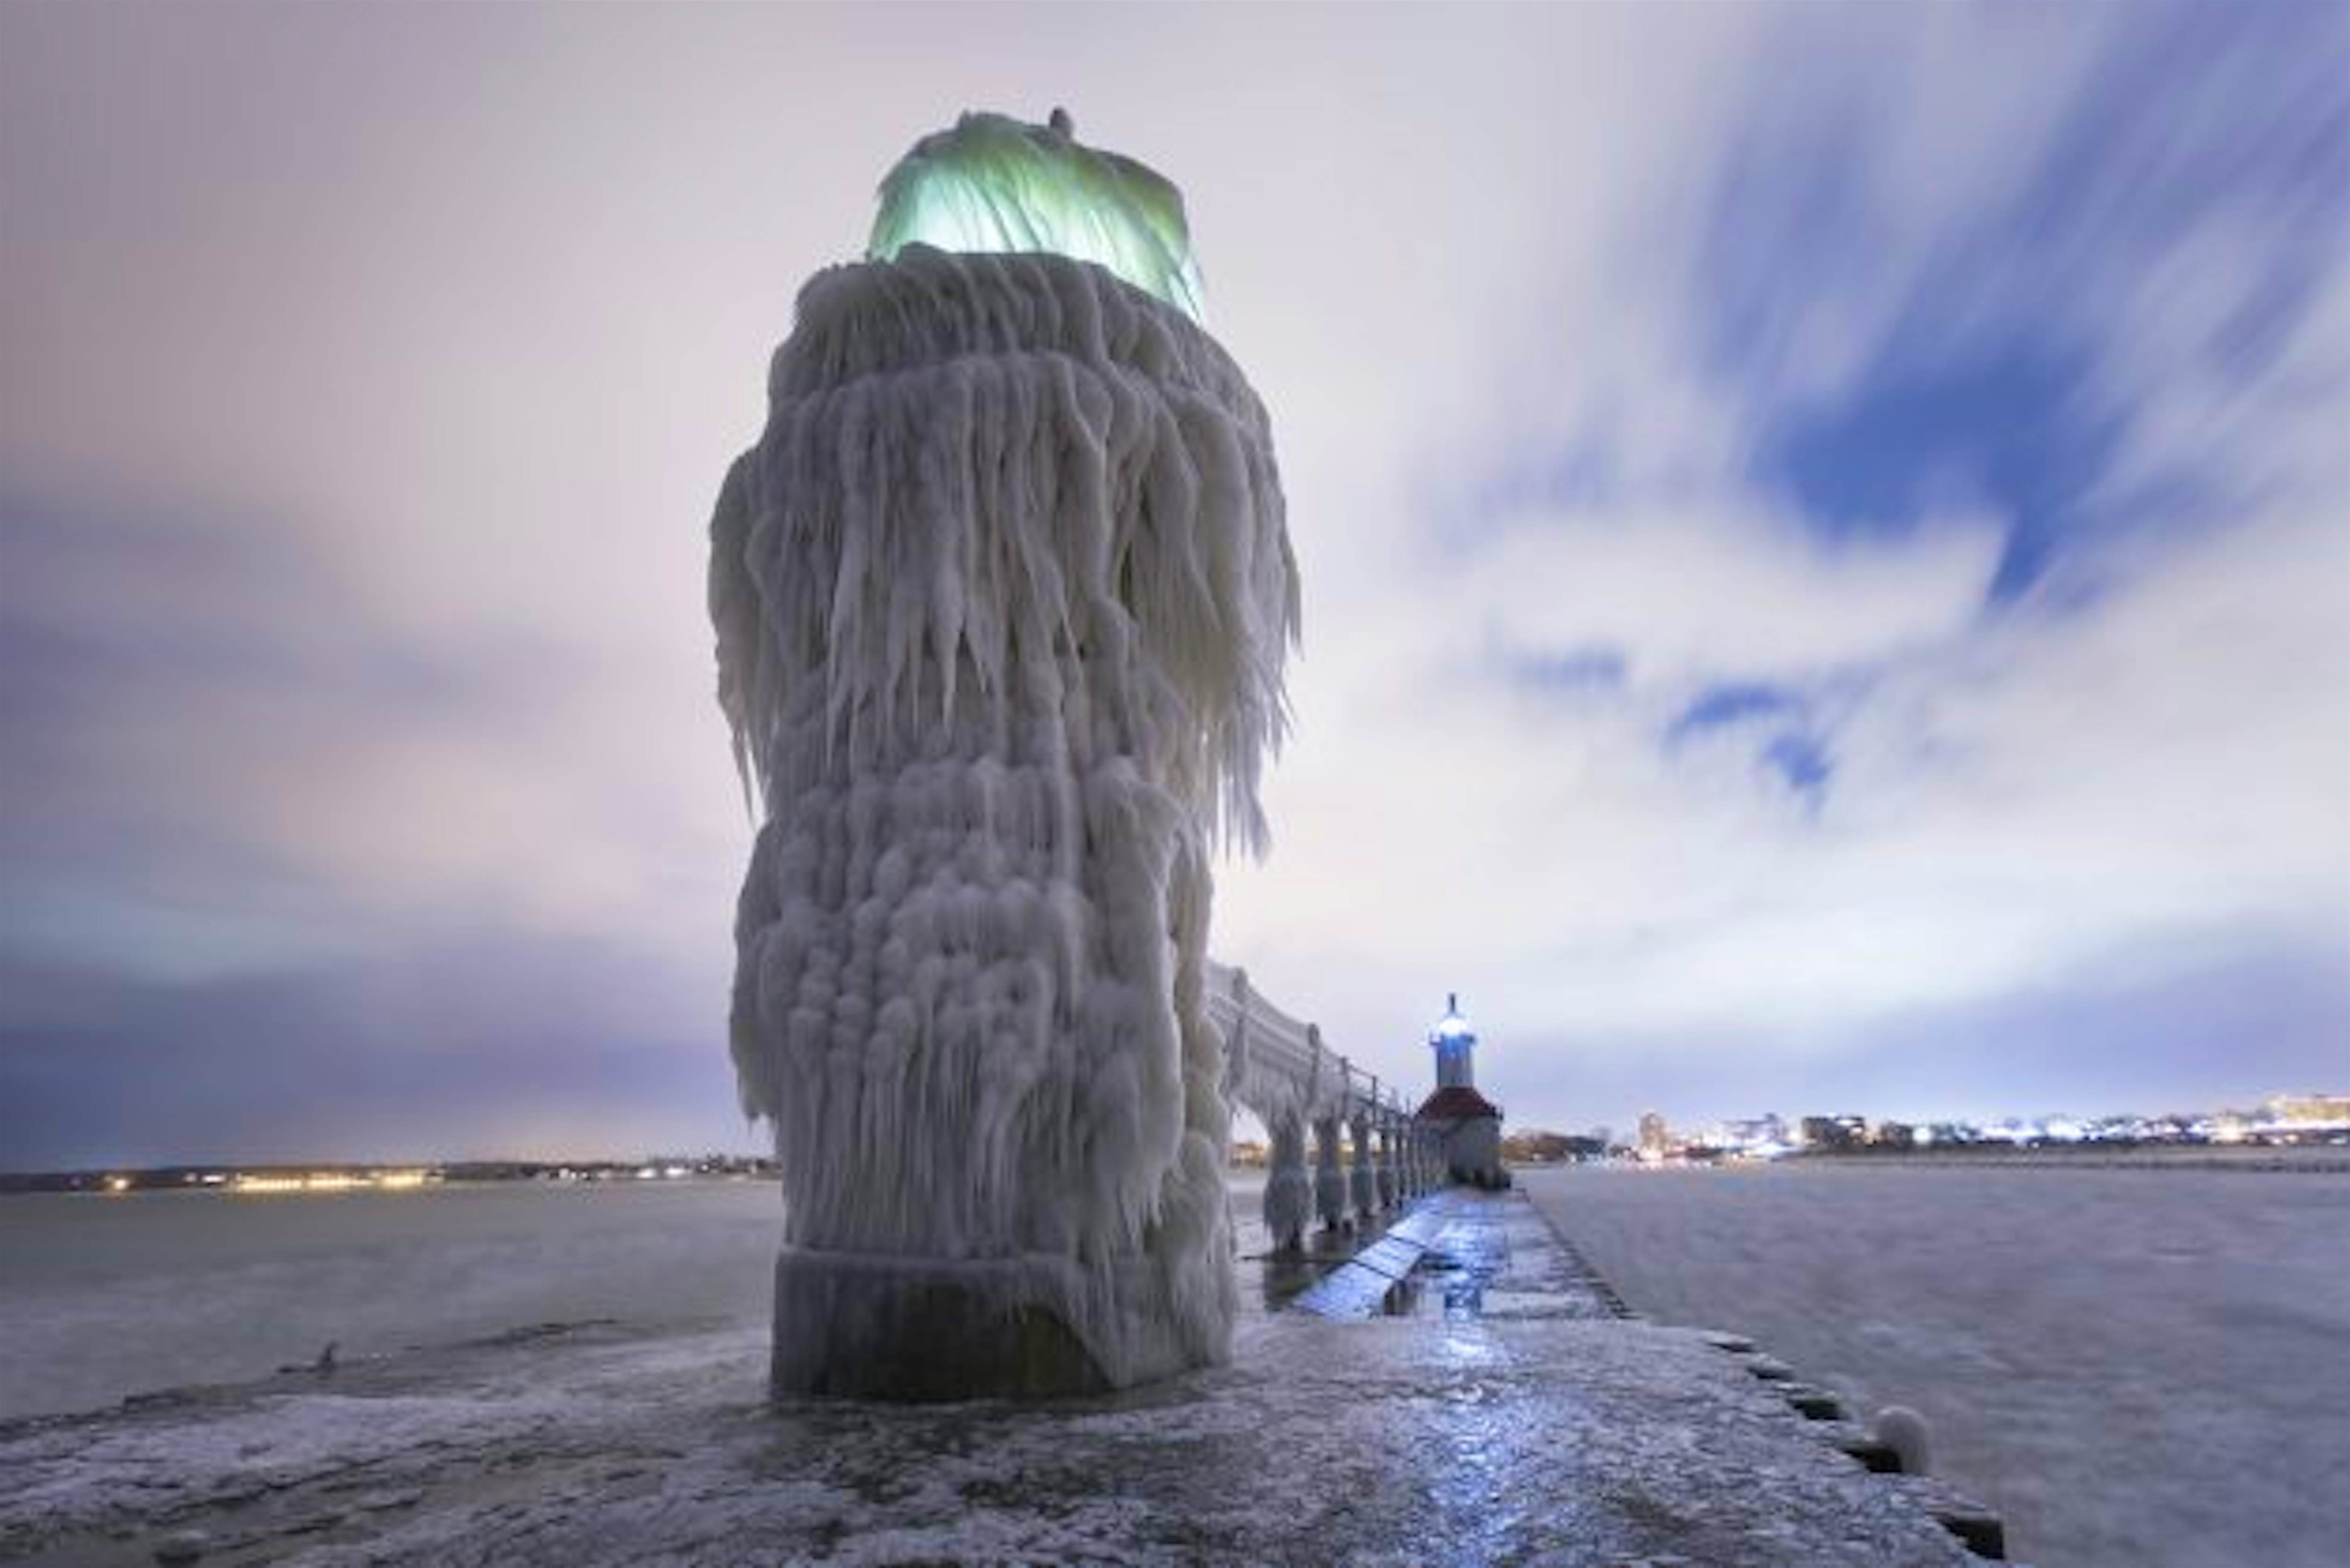 Photographer shares stunning images of the Saint Joseph Lighthouse on